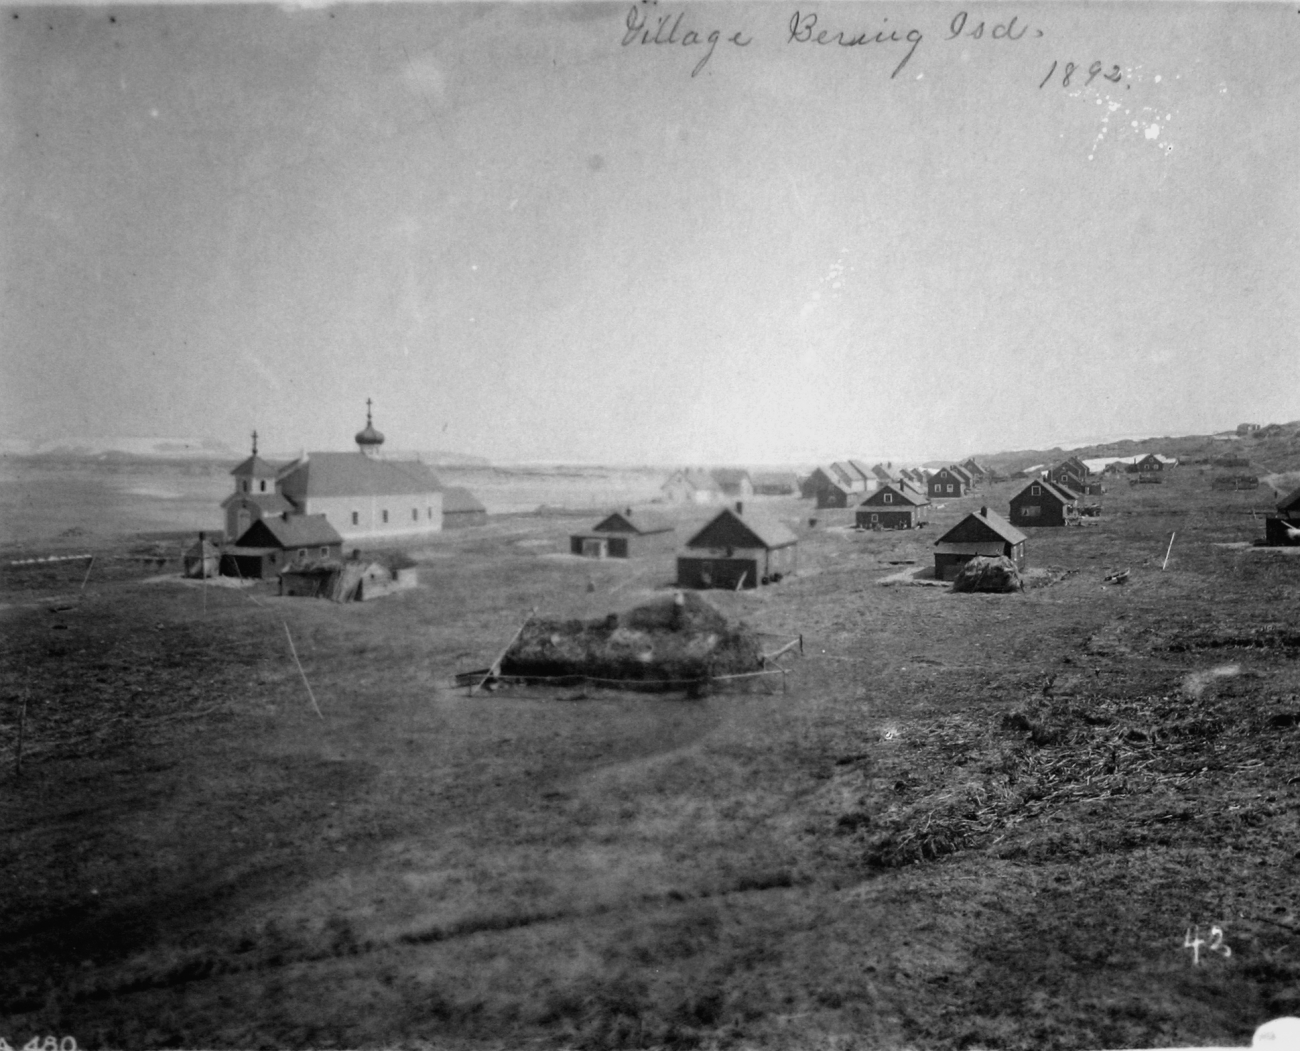 Village, Bering Island, 1892